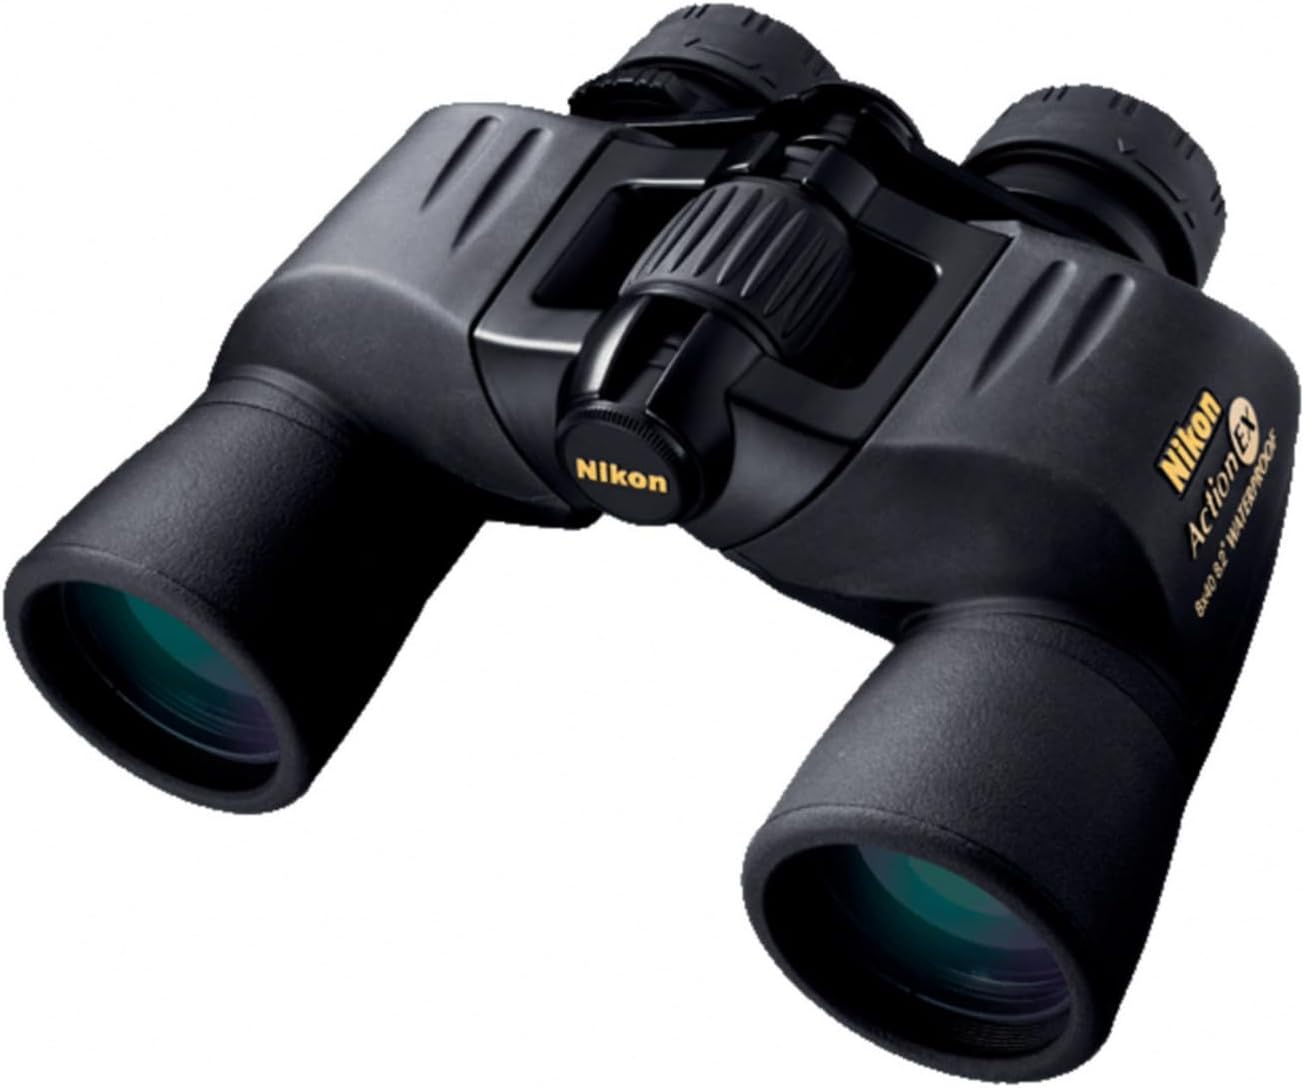 Nikon 7238 Action Ex Extreme Binoculars Review